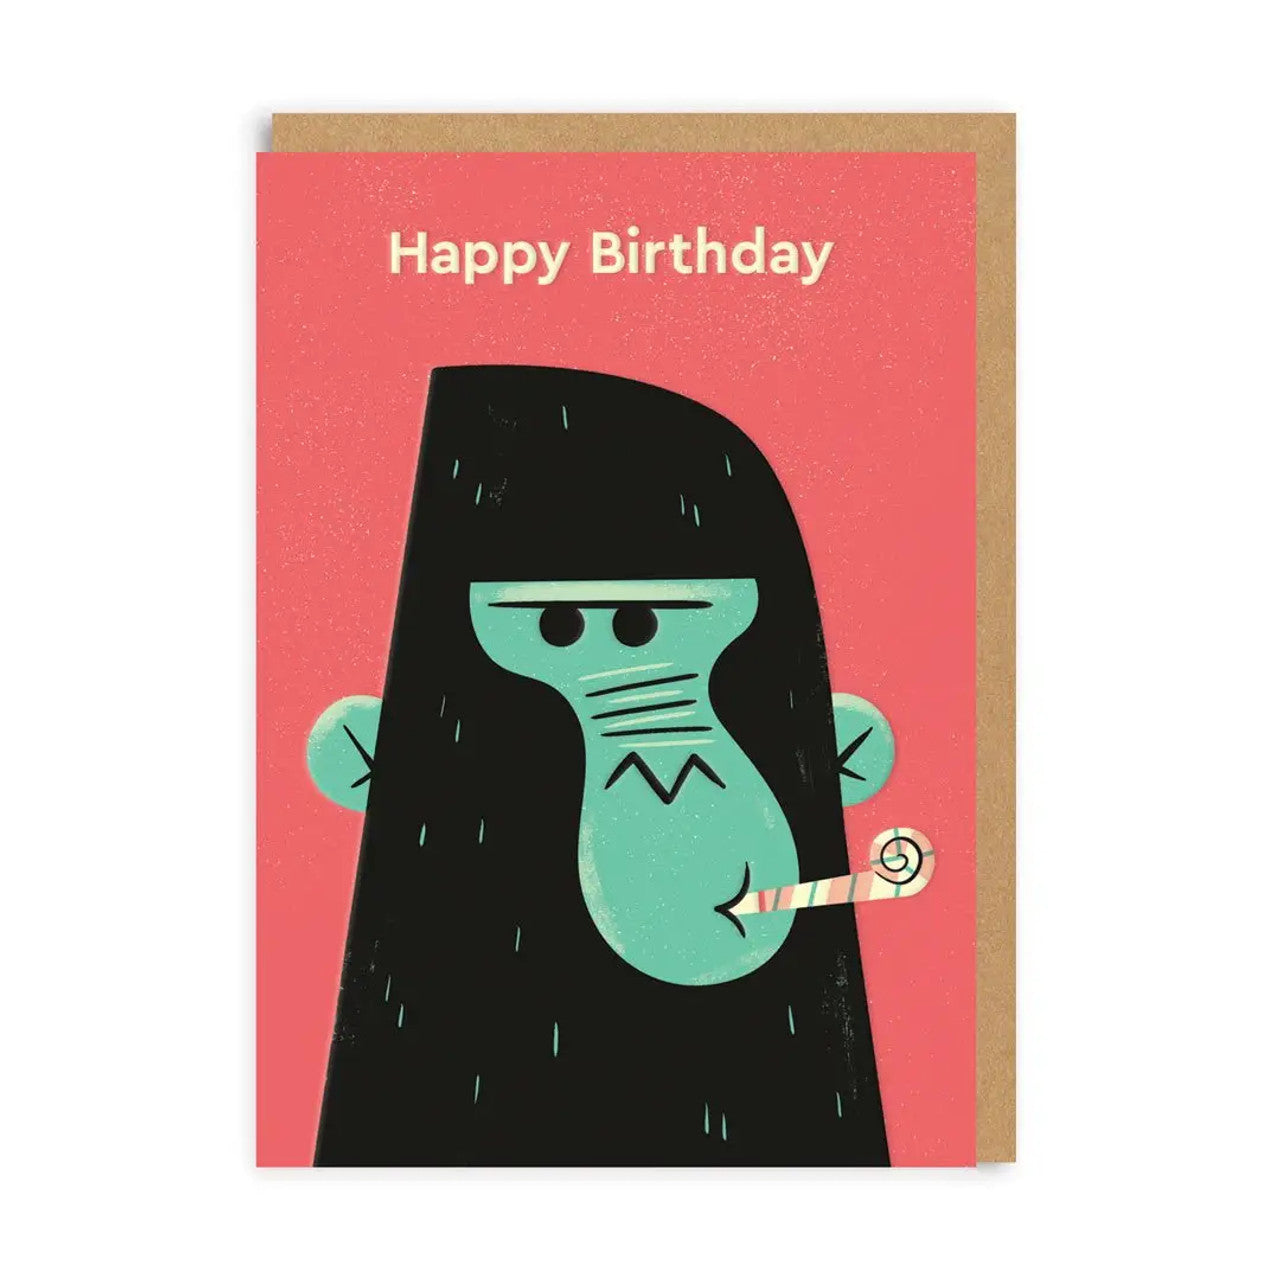 Gorilla Birthday Card text reads "Happy Birthday"